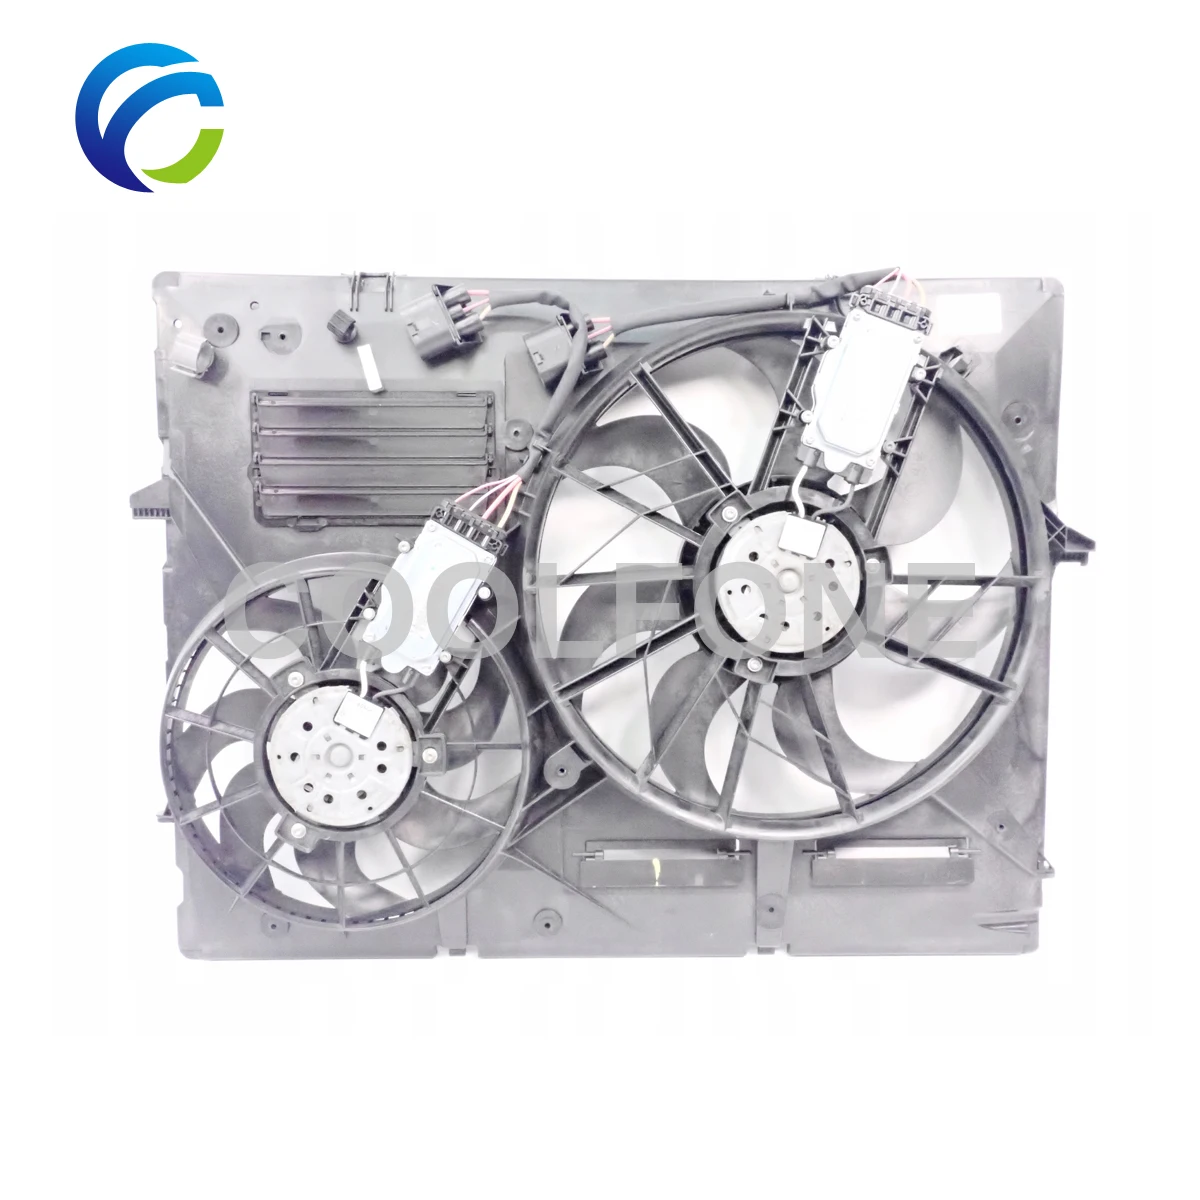 

Electric Cooling Fan for AUDI Q7 4LB VW TOUAREG 2.5TDI 3.0T 3.2 4.2 5.0 6.0 0130307091 7L0121207D 7L0121207A